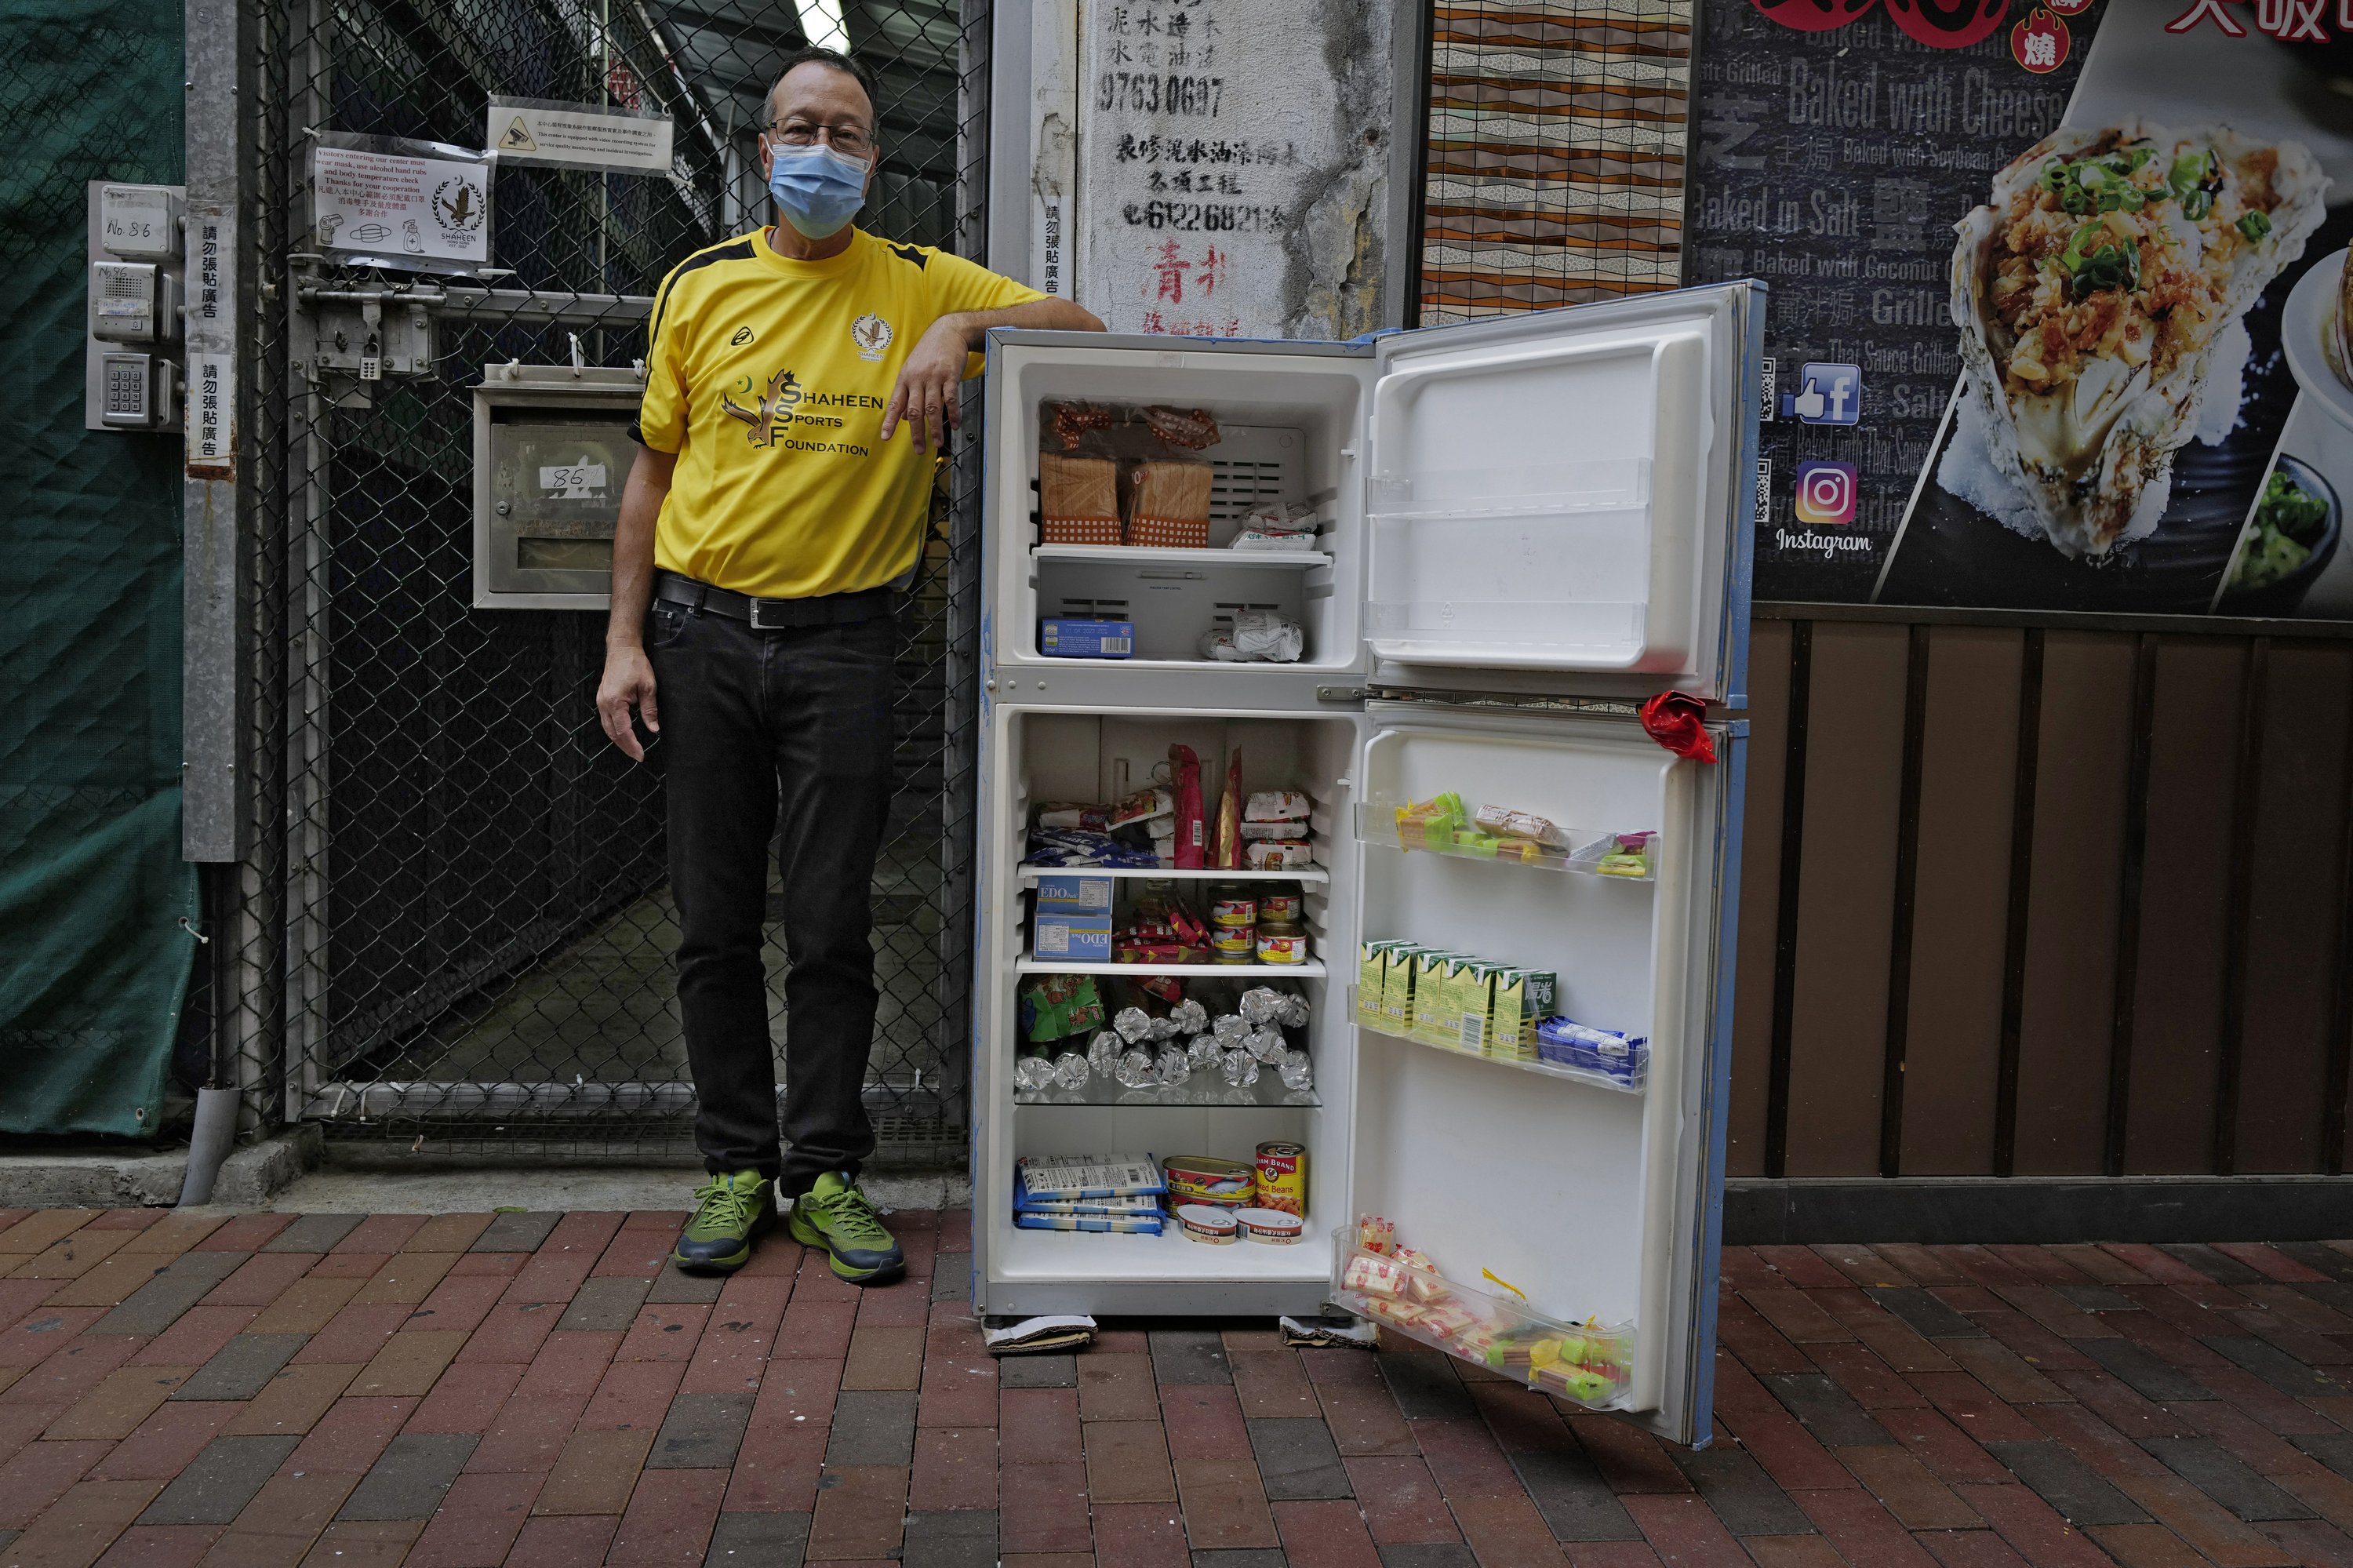 The Hong Kong street refrigerator gives it its all